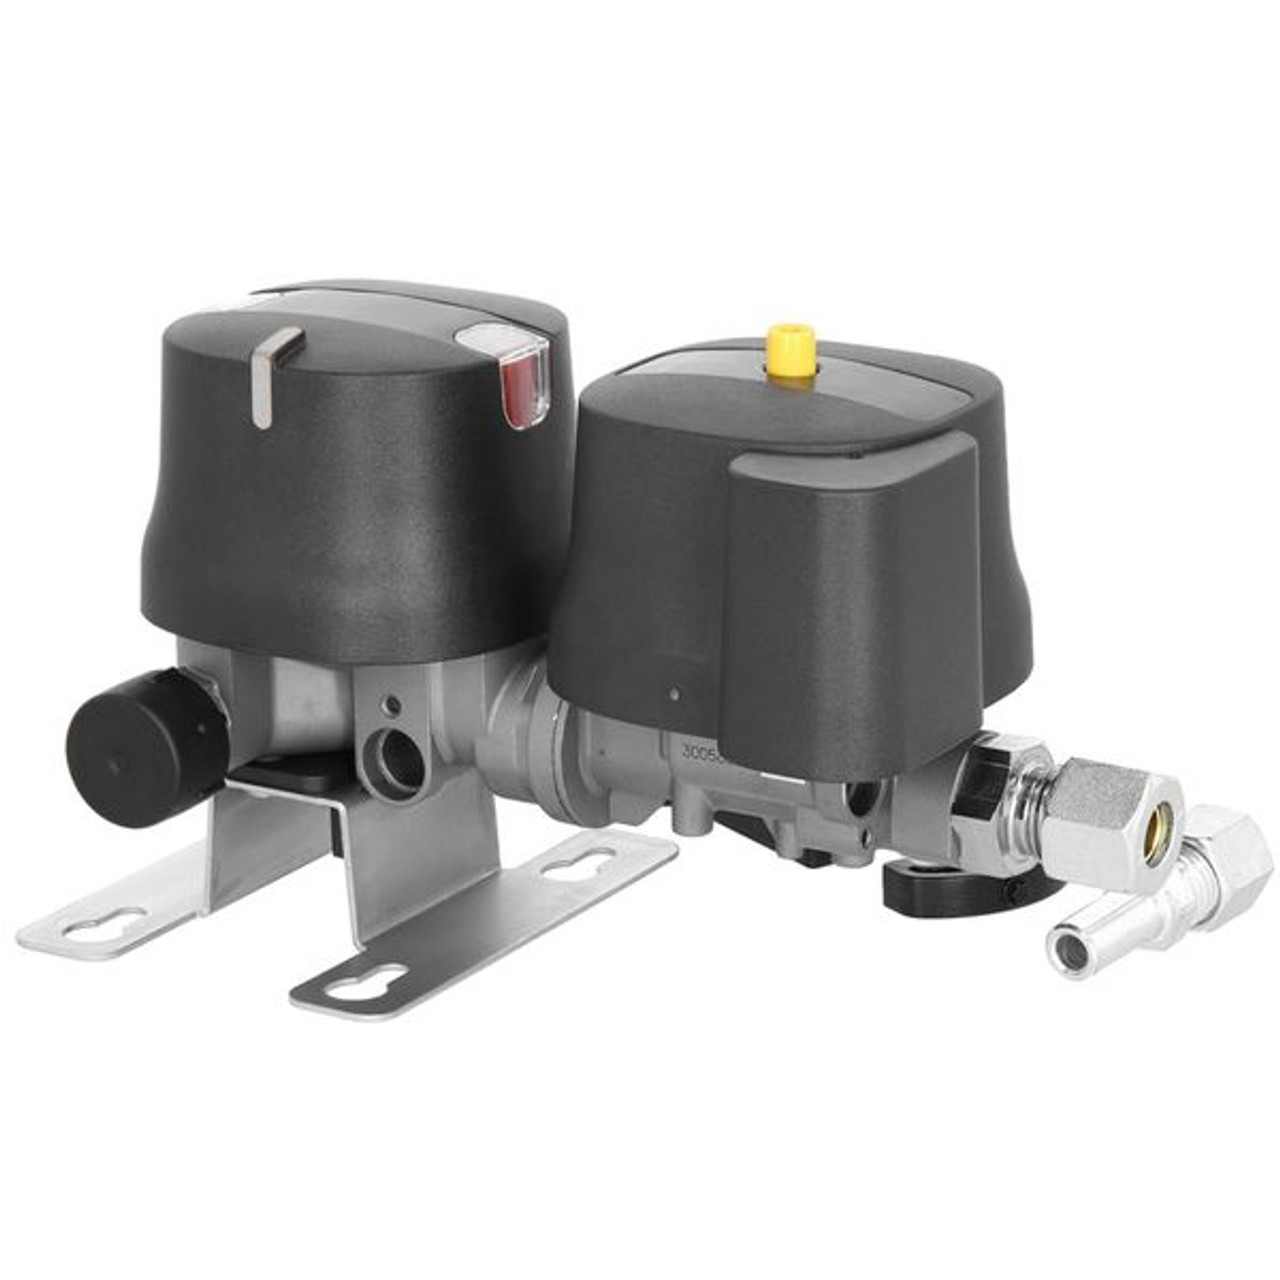 Truma DuoControl CS gas pressure regulator vertical 2 x G.36 -> 10 or 8 mm